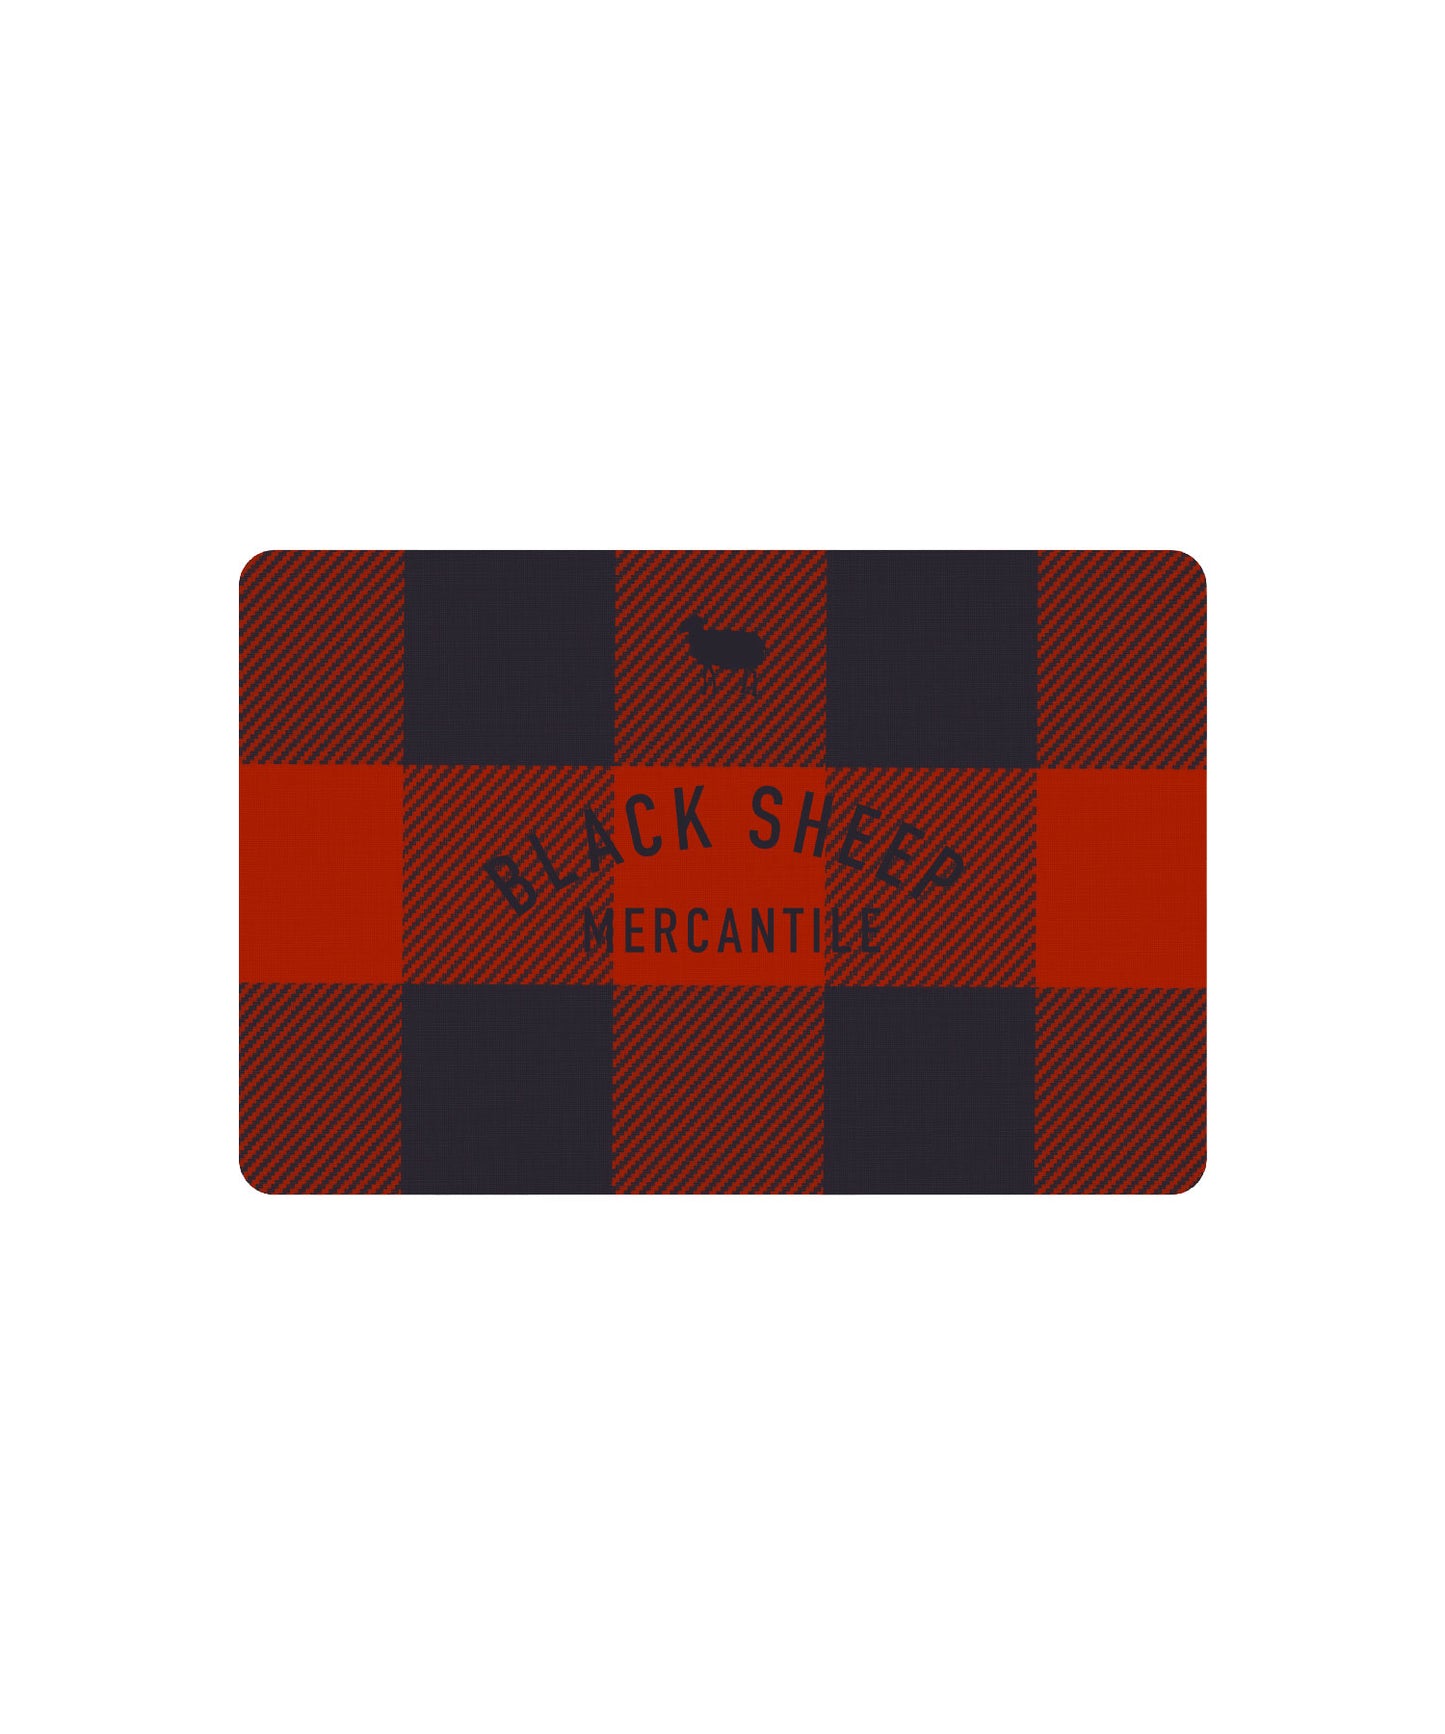 Black Sheep Mercantile Gift Card